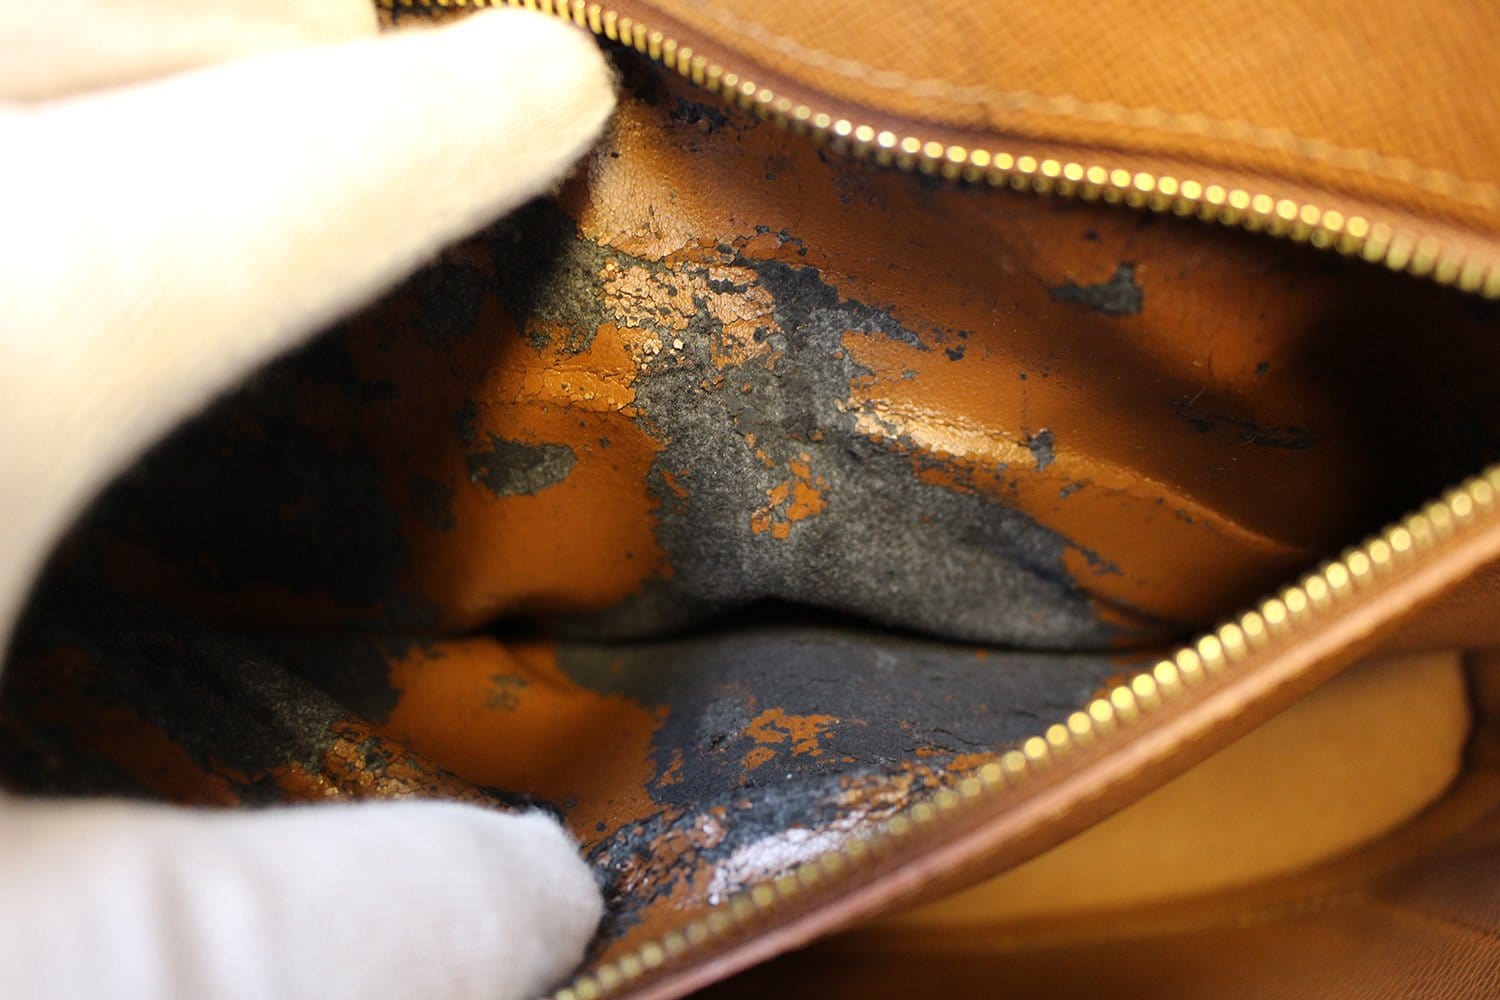 Louis Vuitton Babylone Handbag 394497